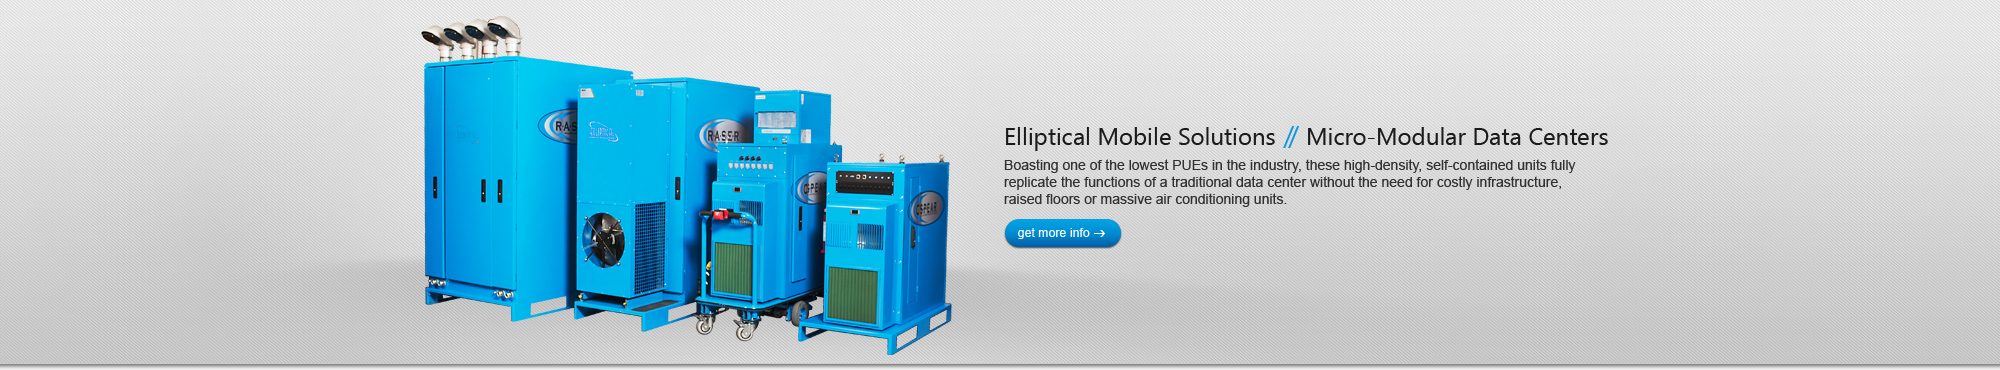 Elliptical Mobile Solutions